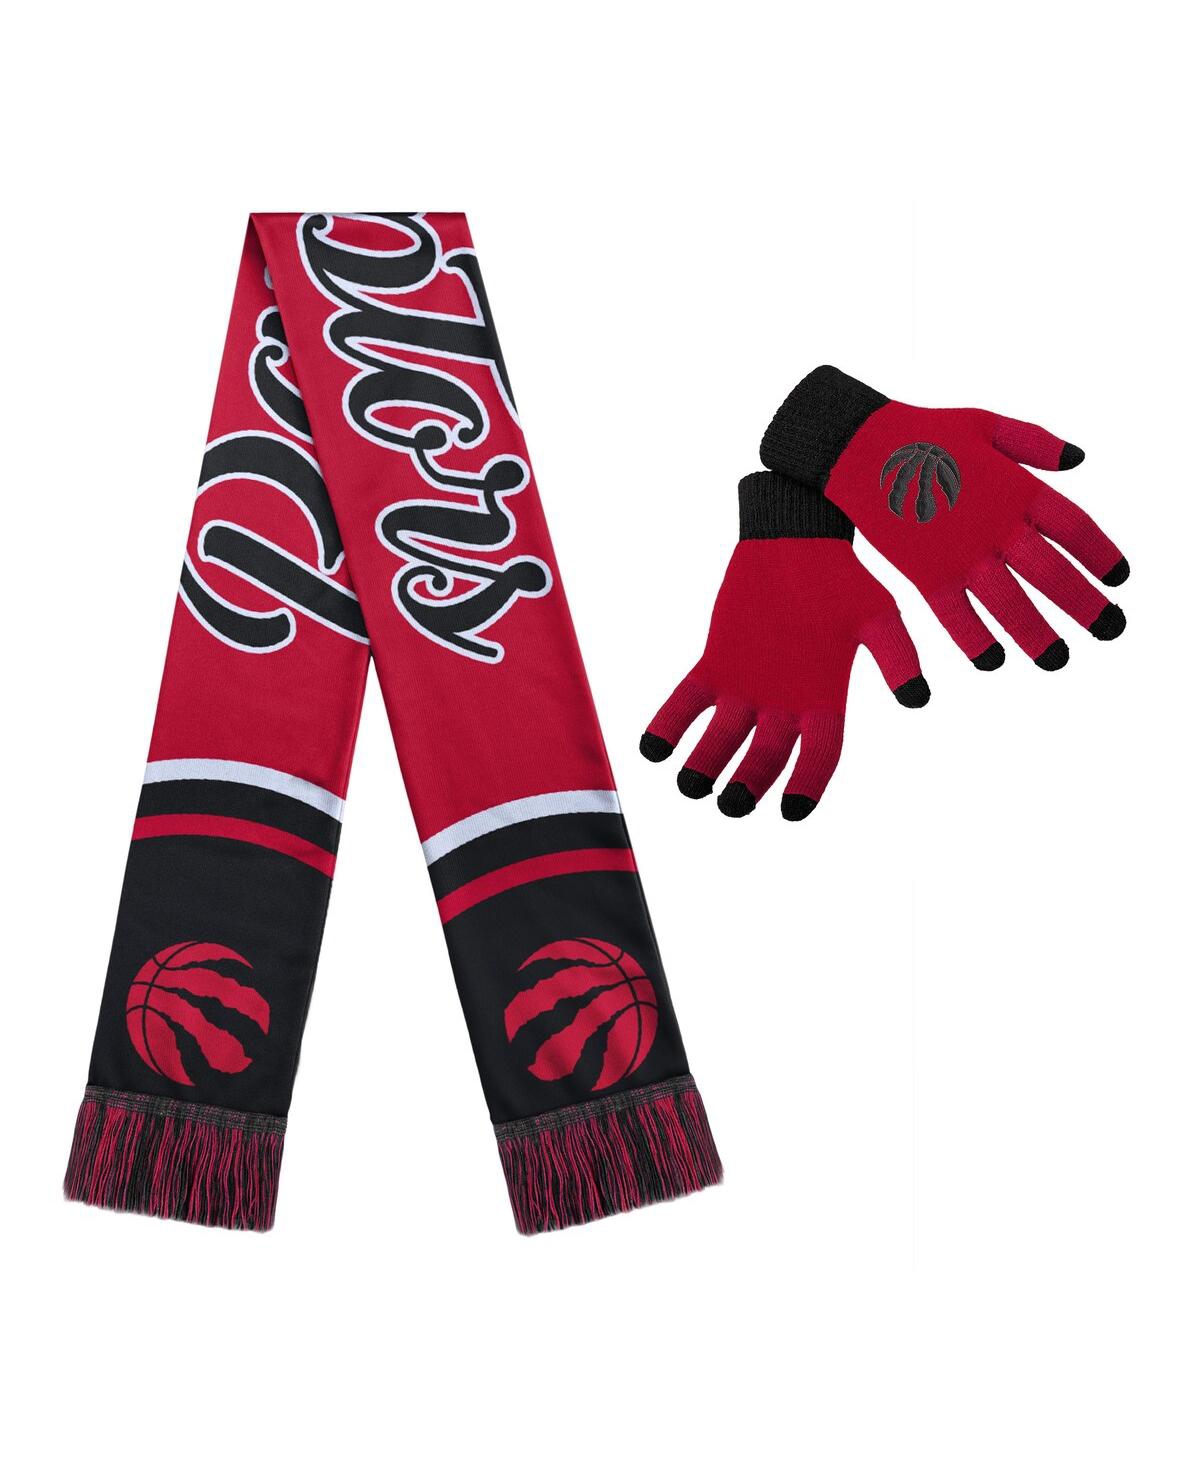 Women's Toronto Raptors Glove and Scarf Set - Multi